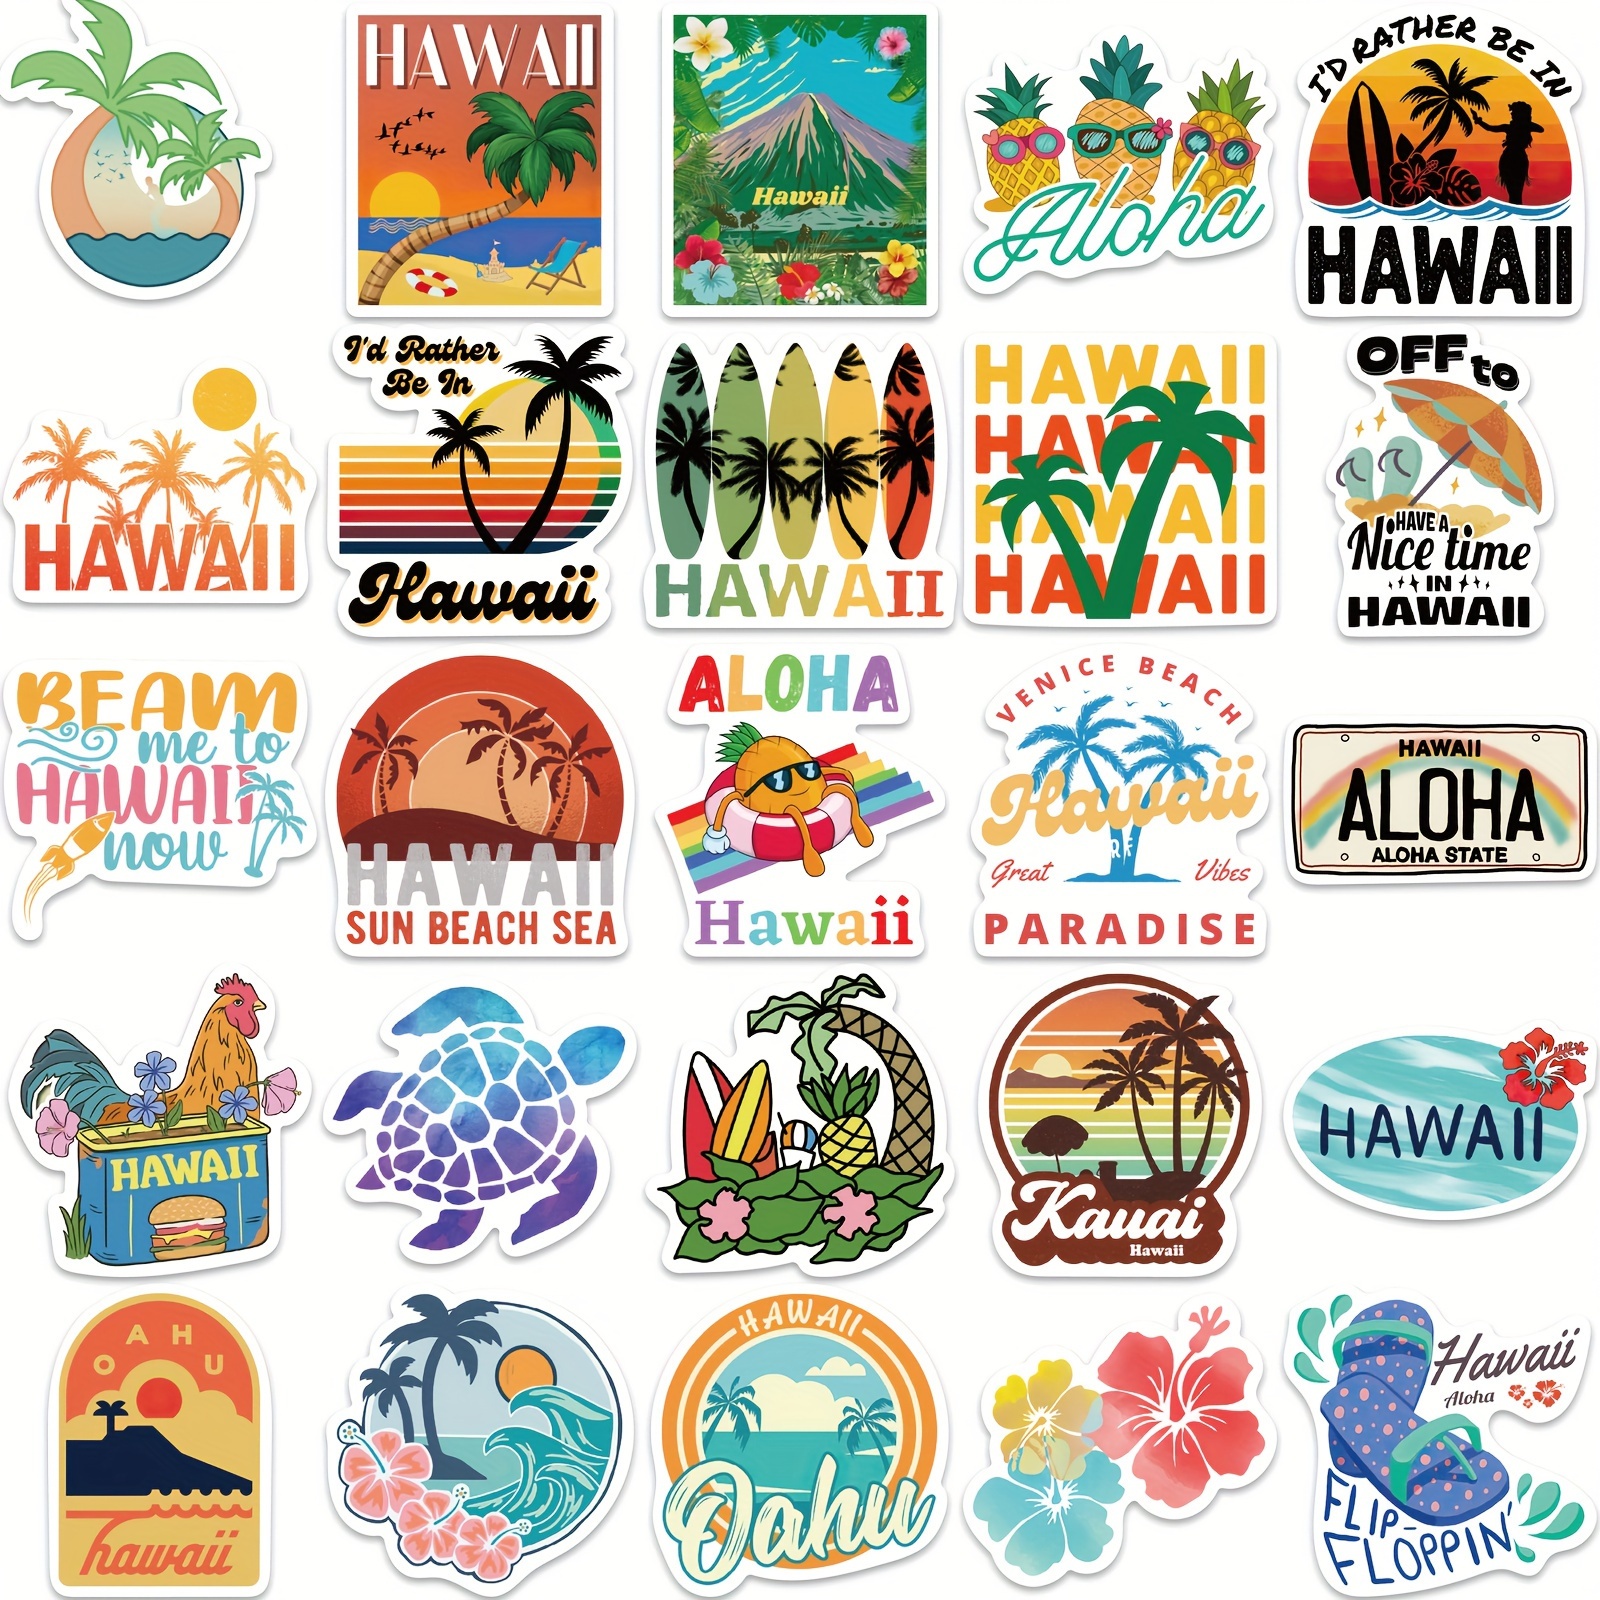 Coconut Bra Flower Boobs Hawaii Aloha Beaches' Sticker